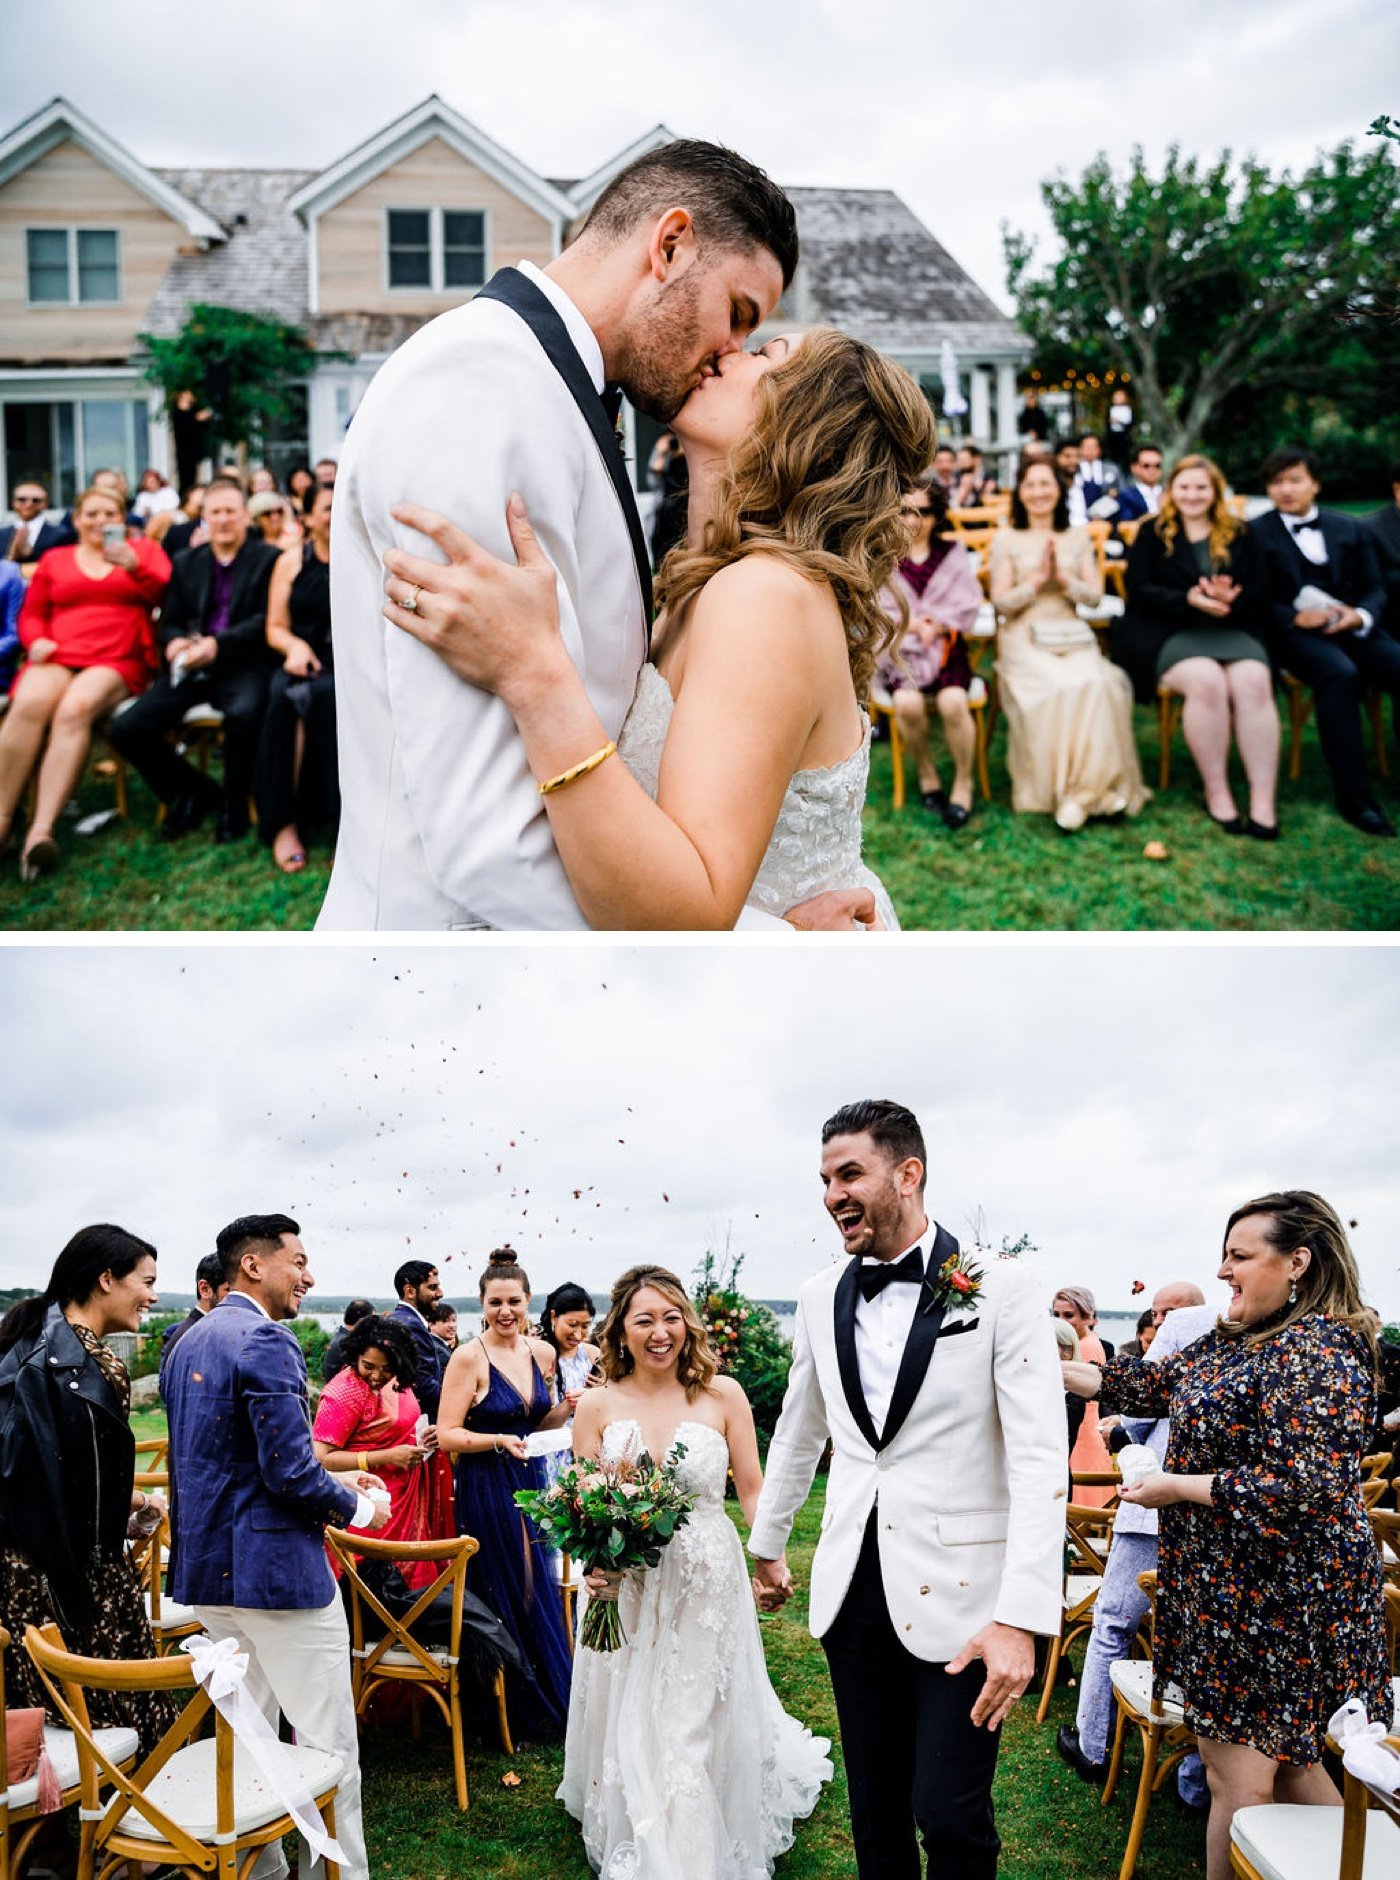 Backyard wedding ceremony in Long Island, NY